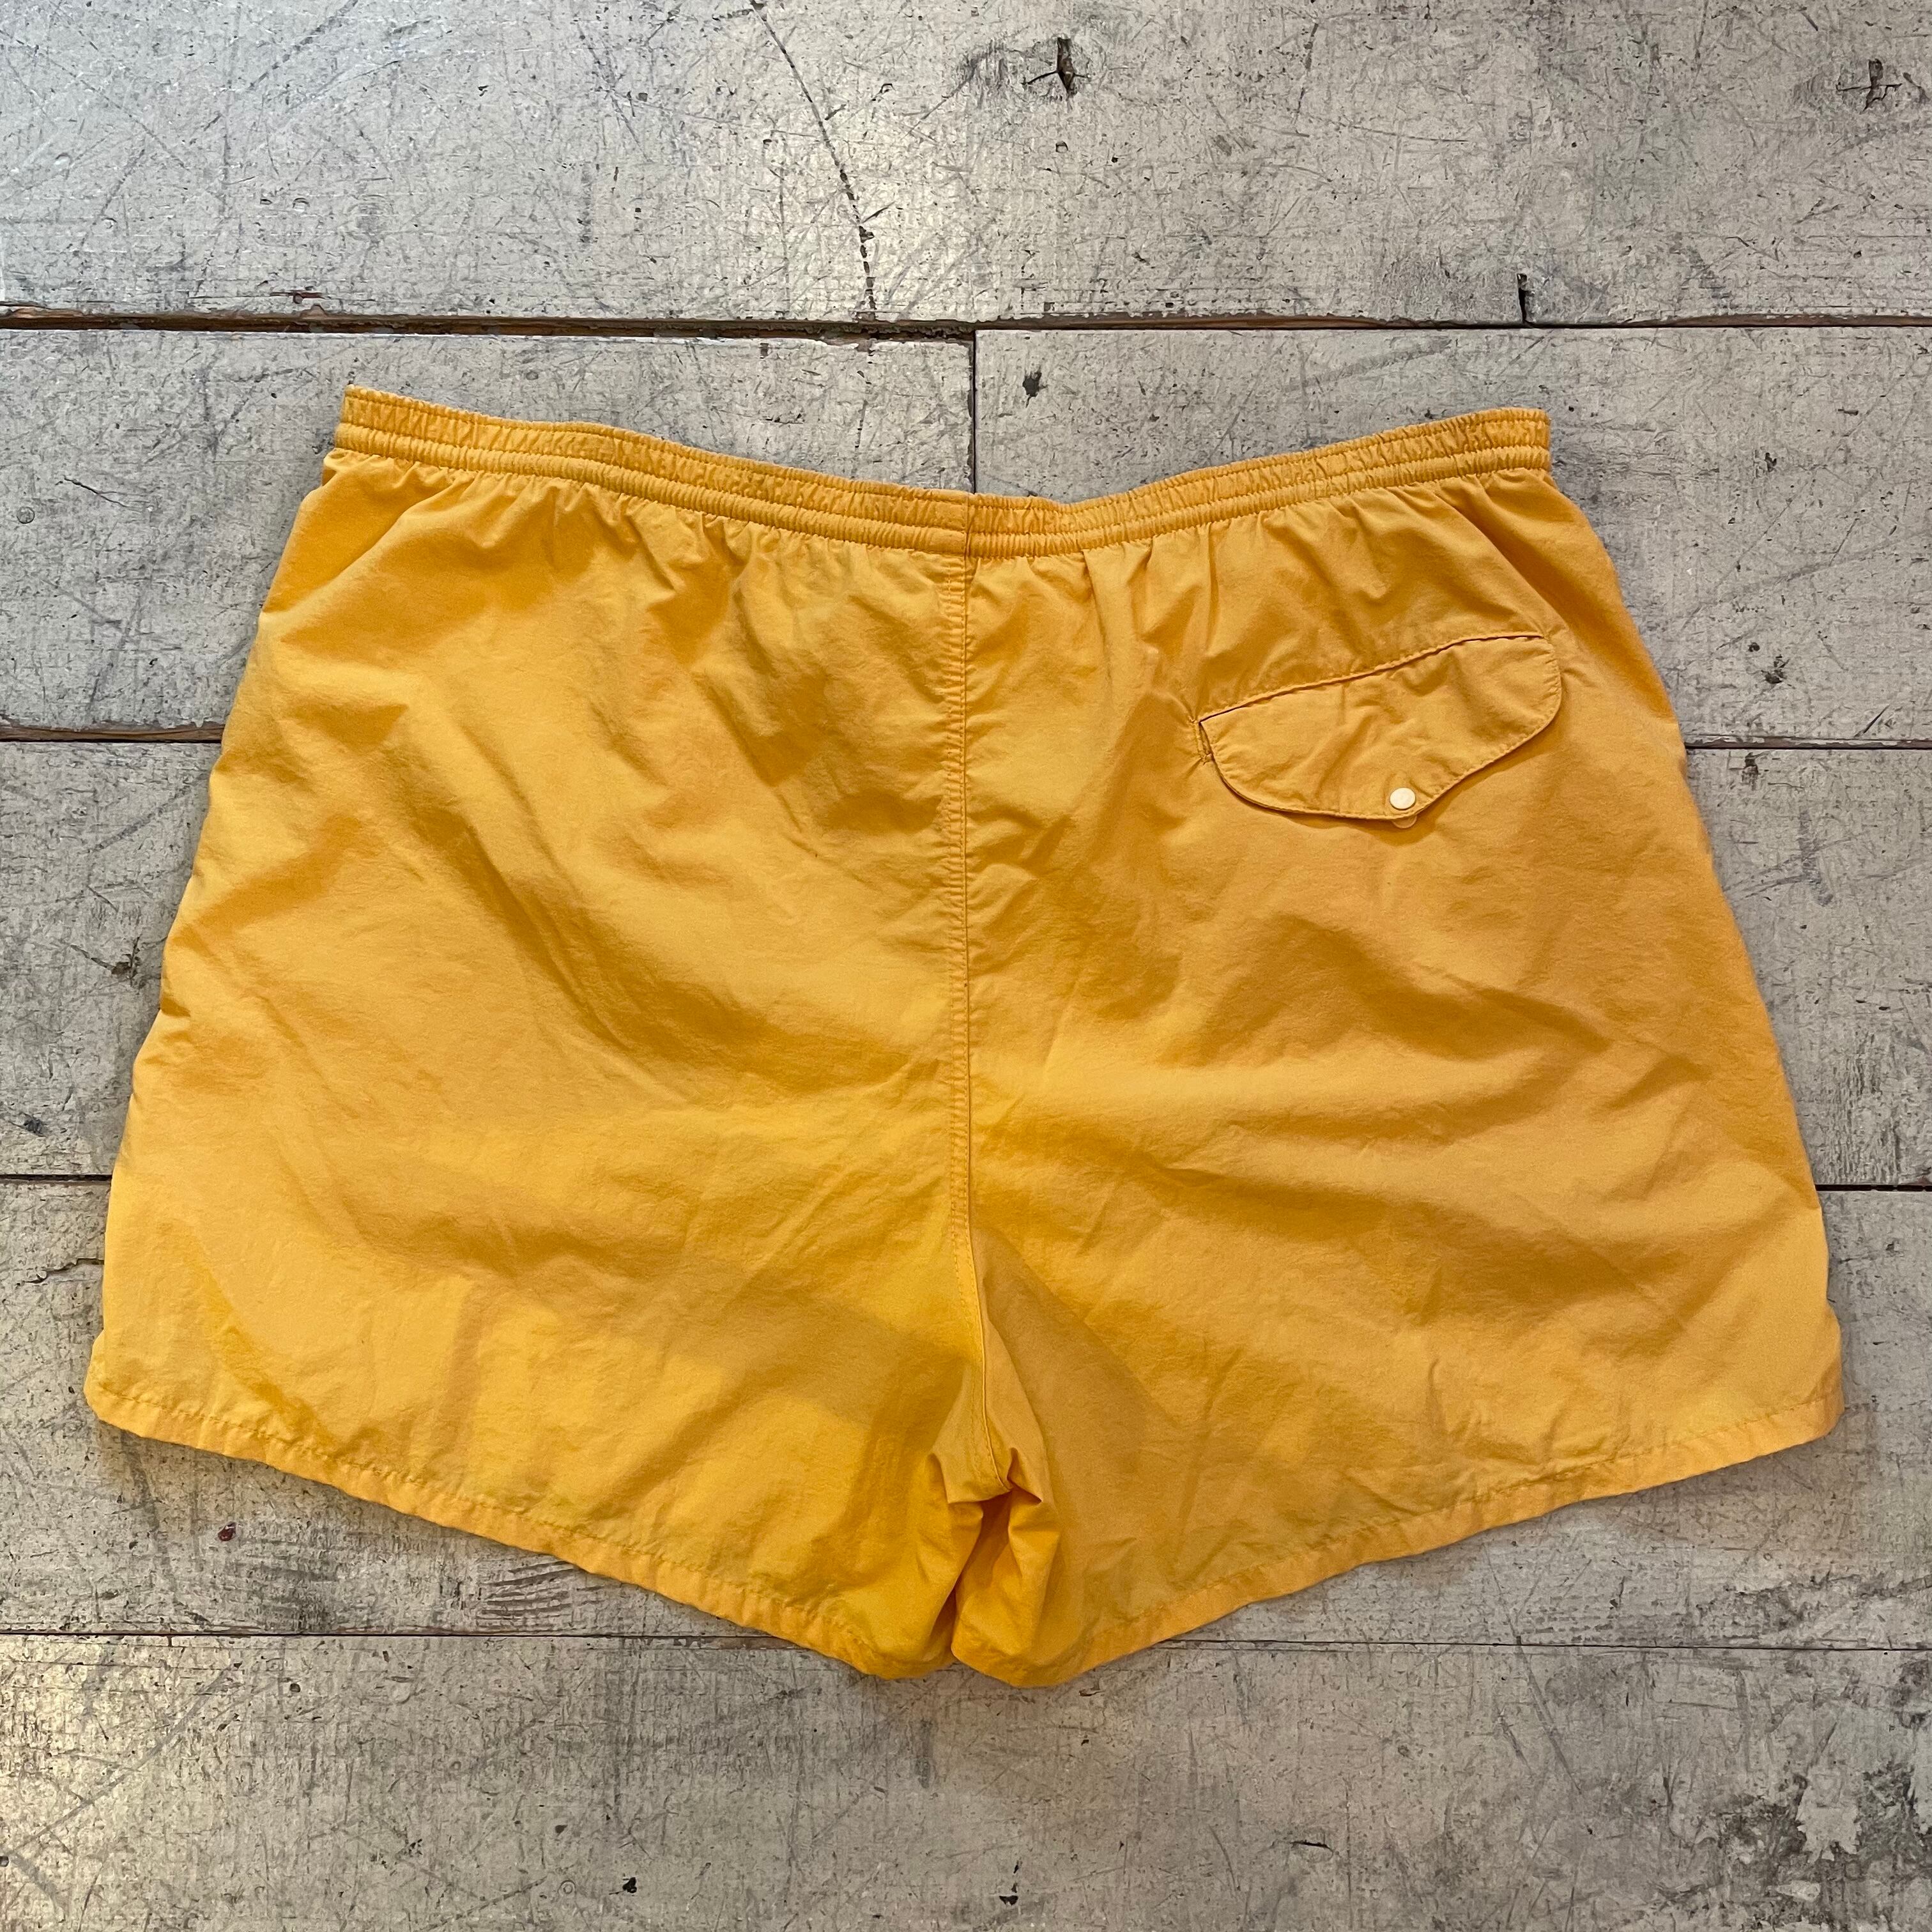 Spring/Summer 1991 Patagonia 3.5” Baggies Shorts, Yellow (XL/XXL)